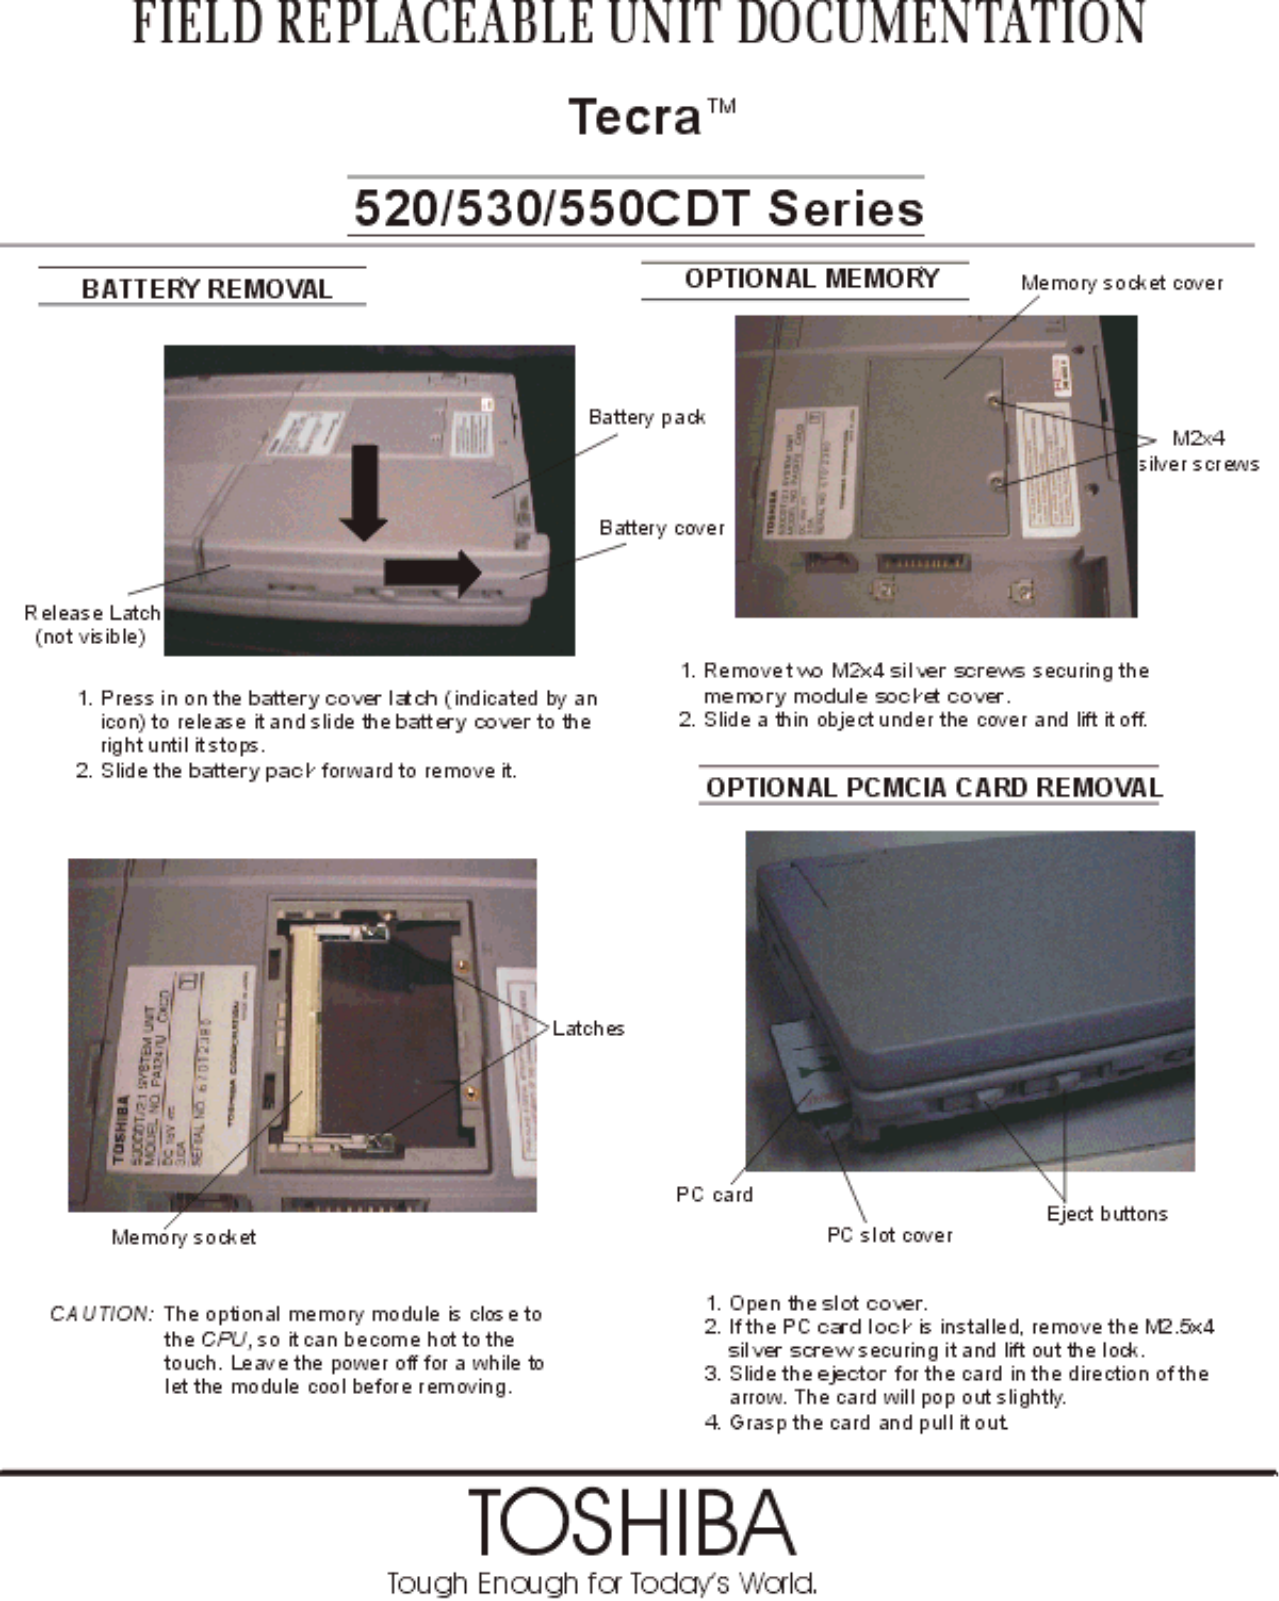 Toshiba Tecra 550, Tecra 530, Tecra 520 Service Manual